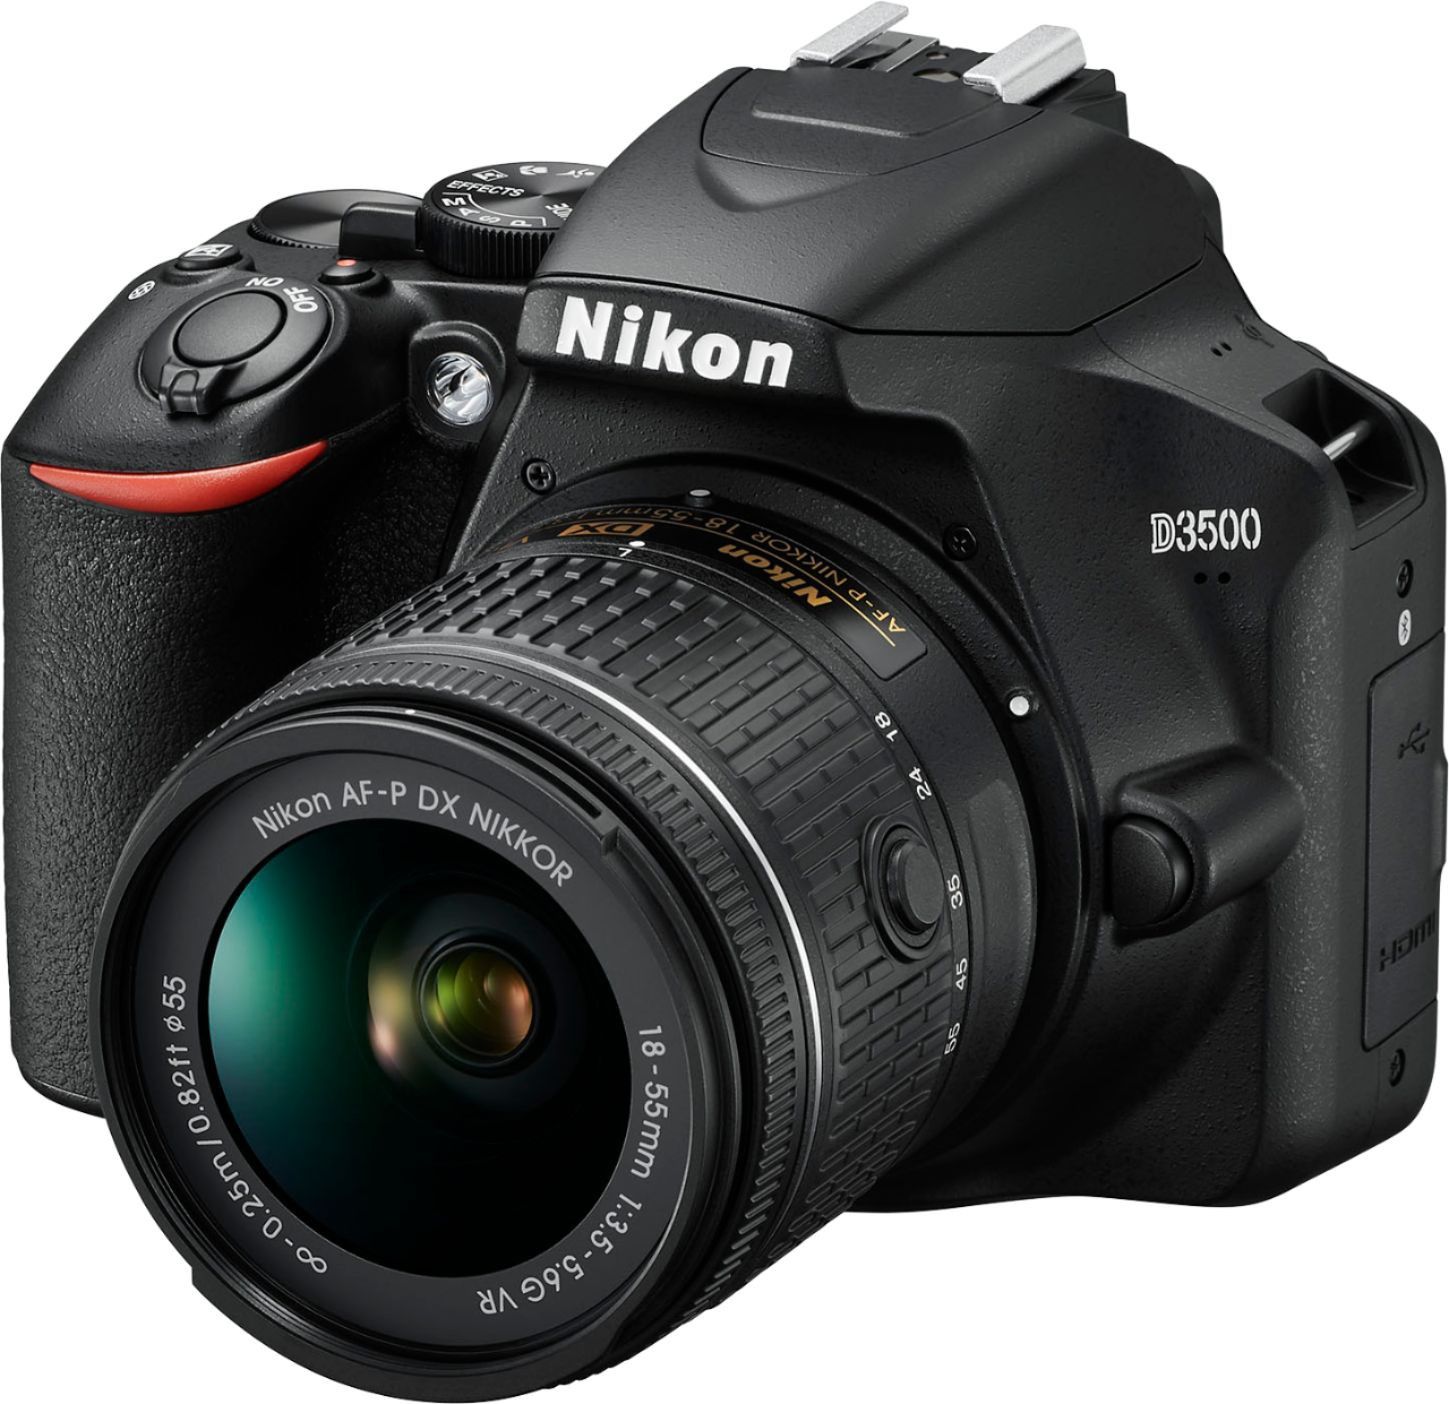 Nikon D3500 Digital SLR Camera BUNDLE w tripod, case and more